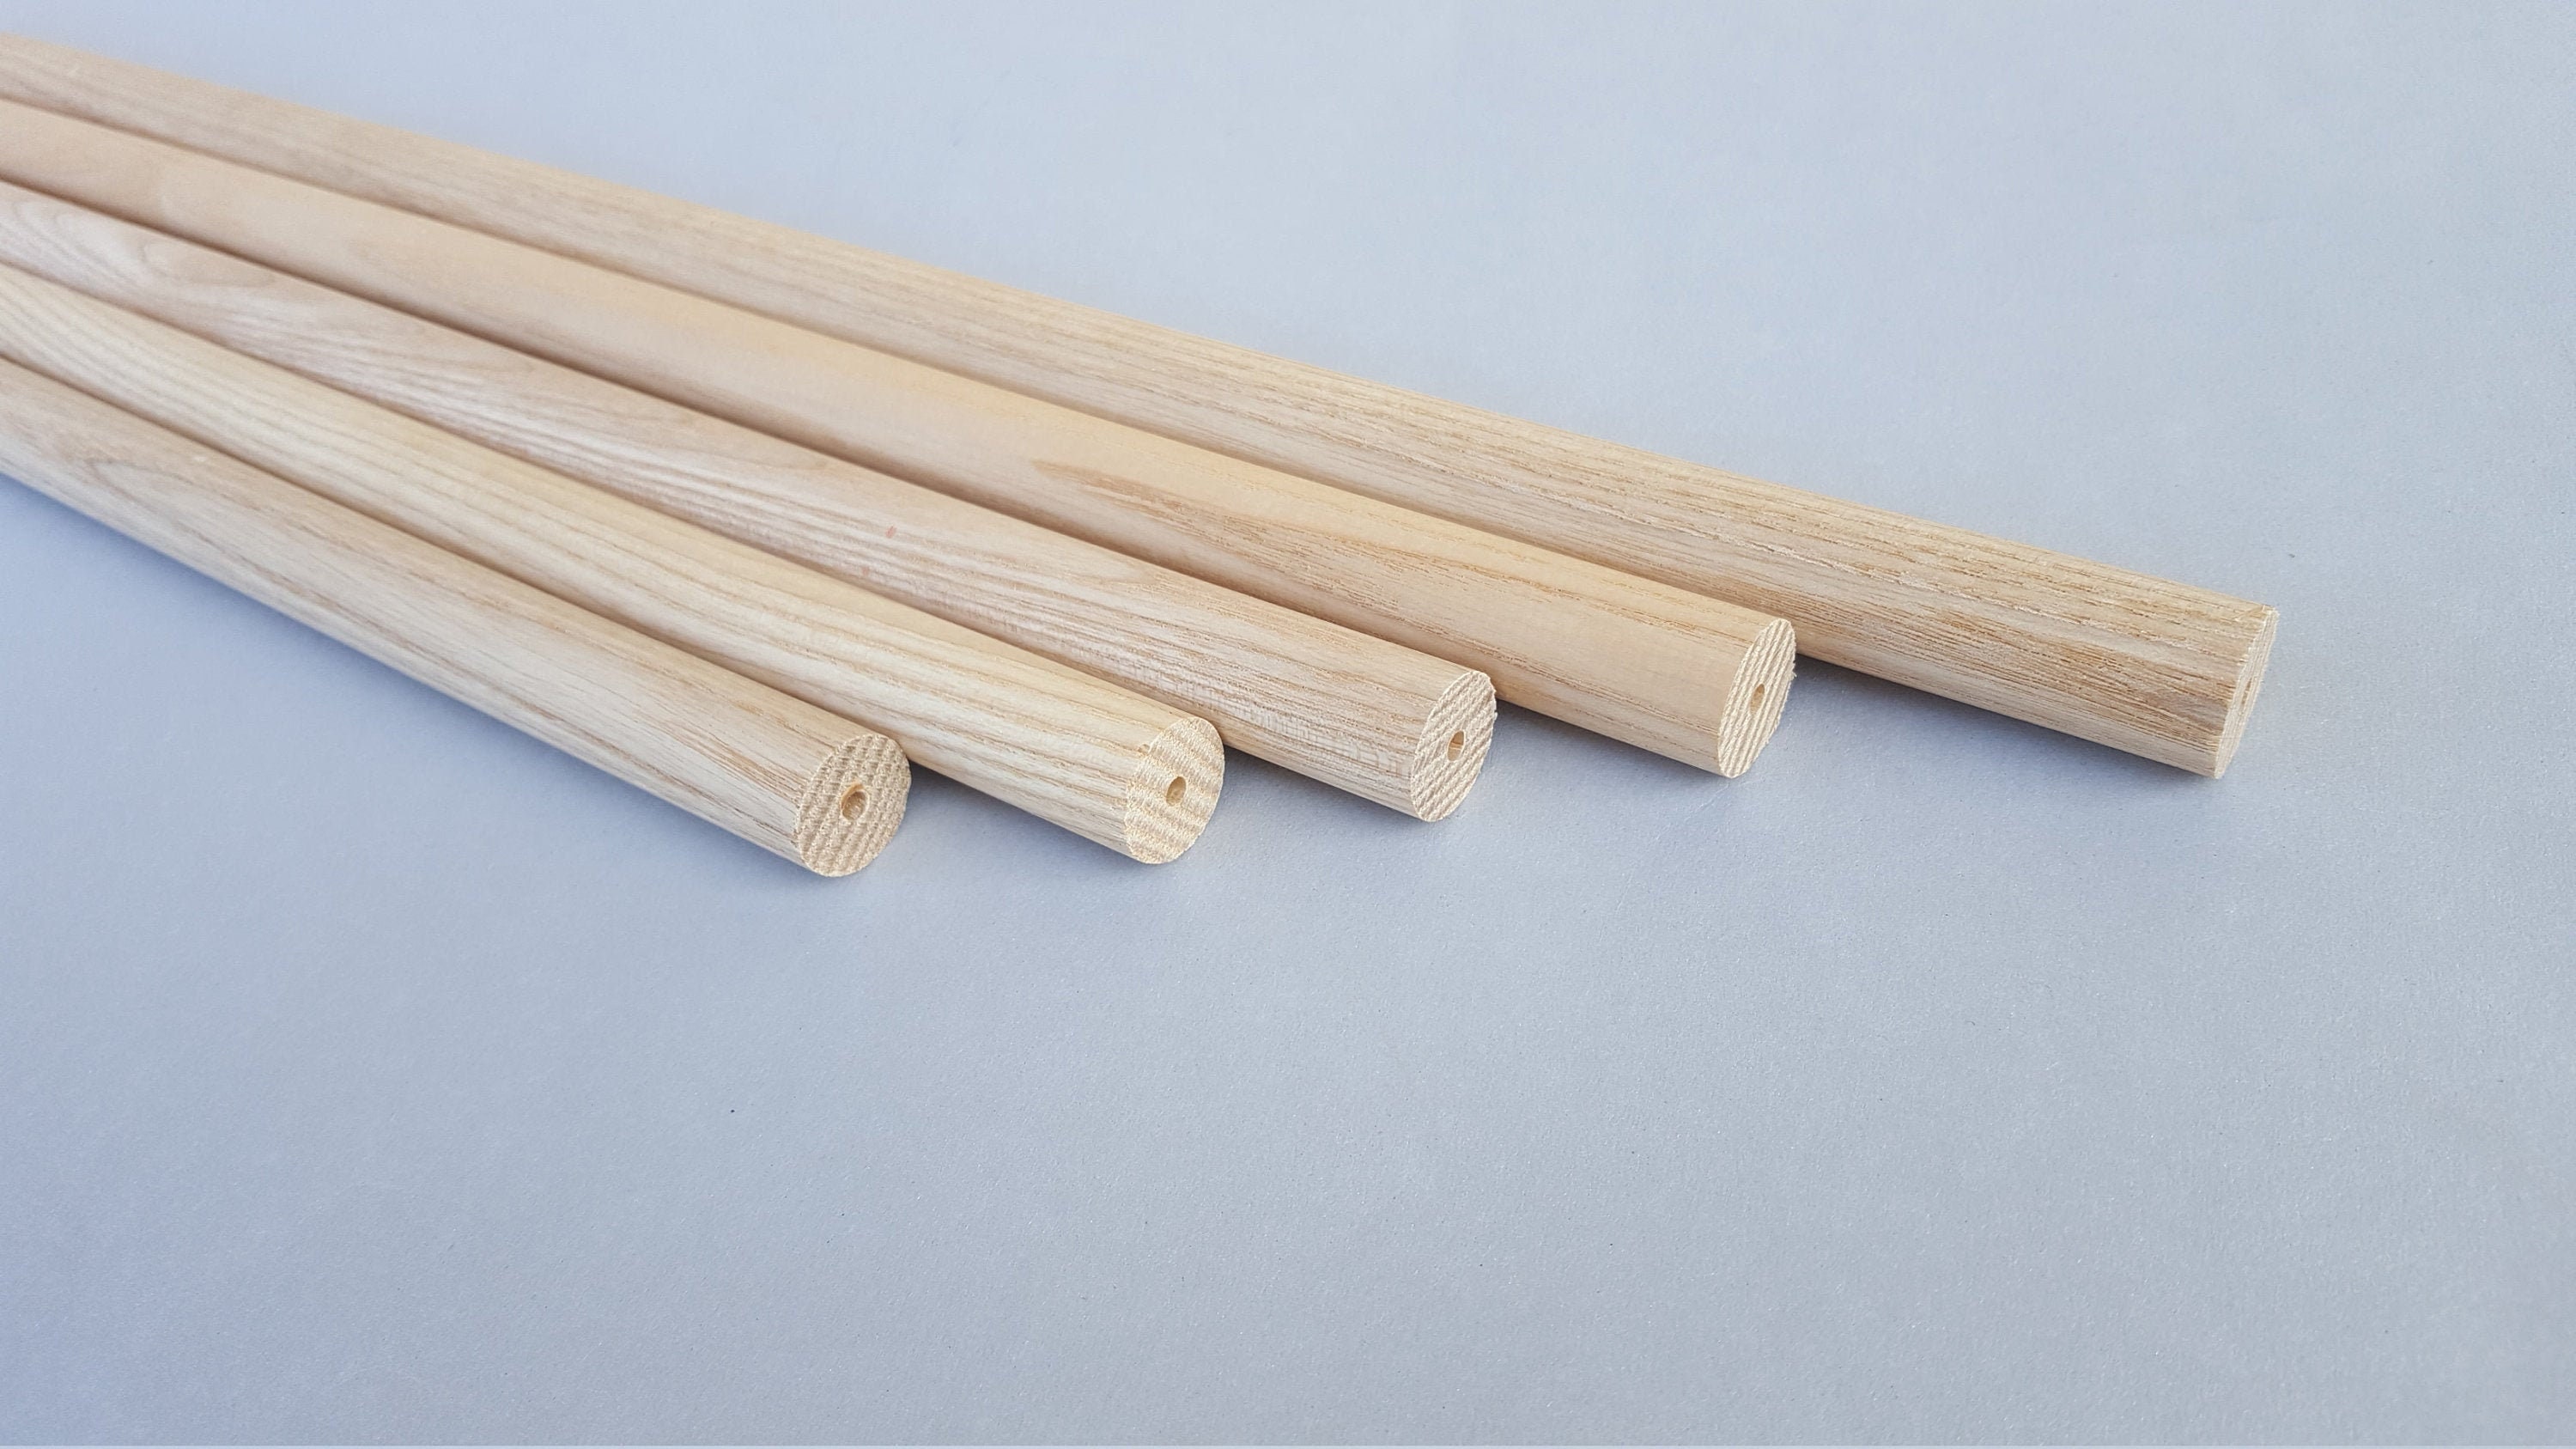 Wooden Dowel Rods Wood Sticks, 12x0.31 Round Wooden Dowels Rod for DIY,  Arts Decoration, Crafts Wand, 20pcs 